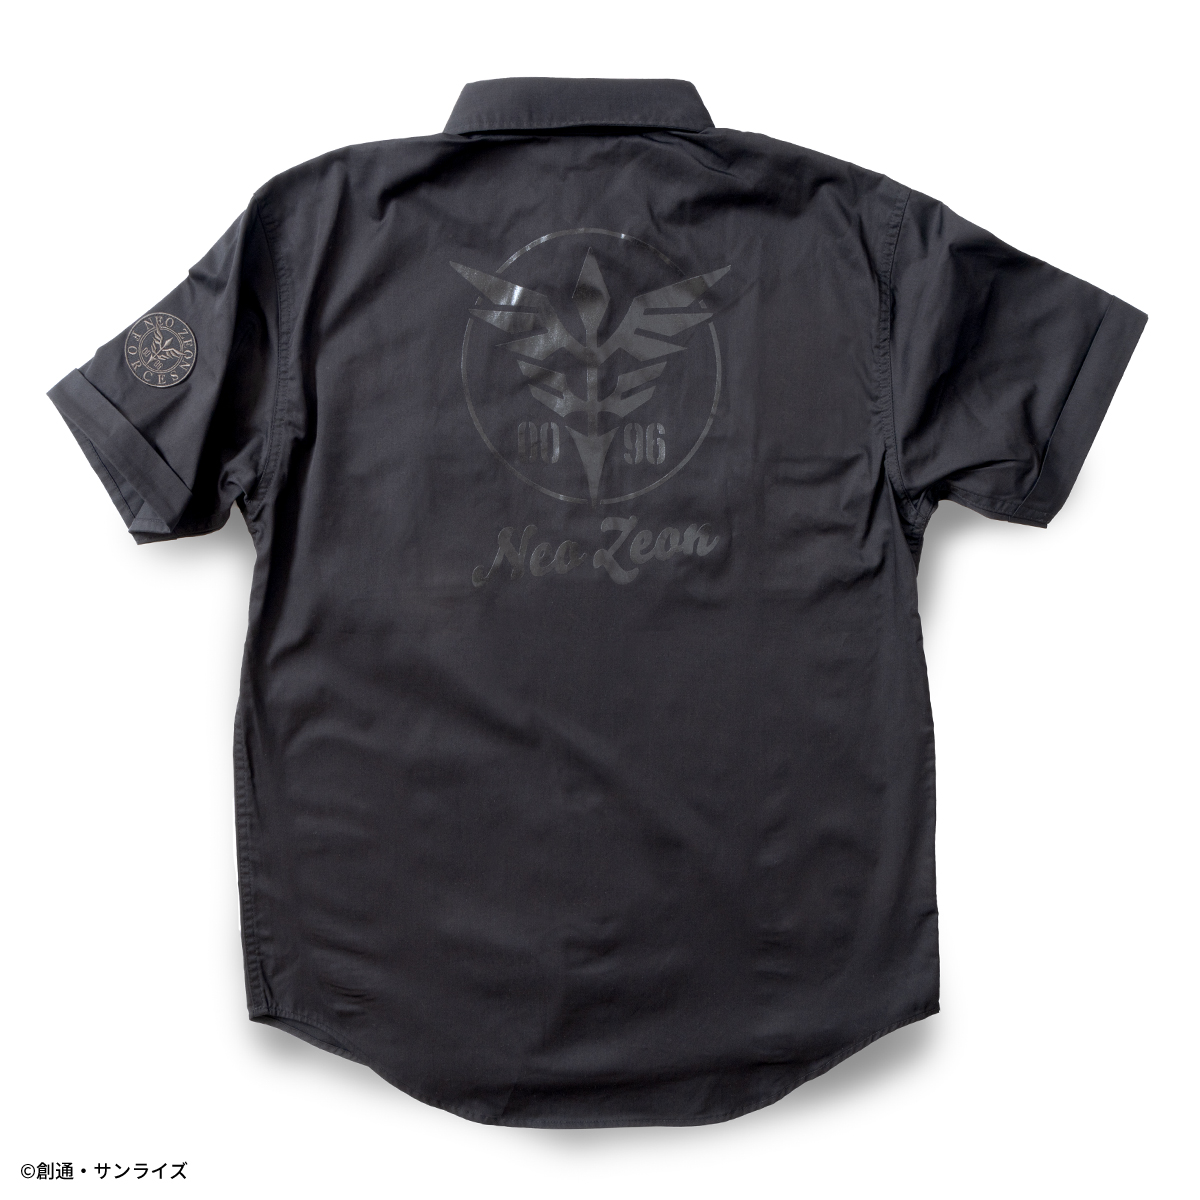 STRICT-G.ARMS『機動戦士ガンダムUC』ワッペン付きシャツ NEO ZEON